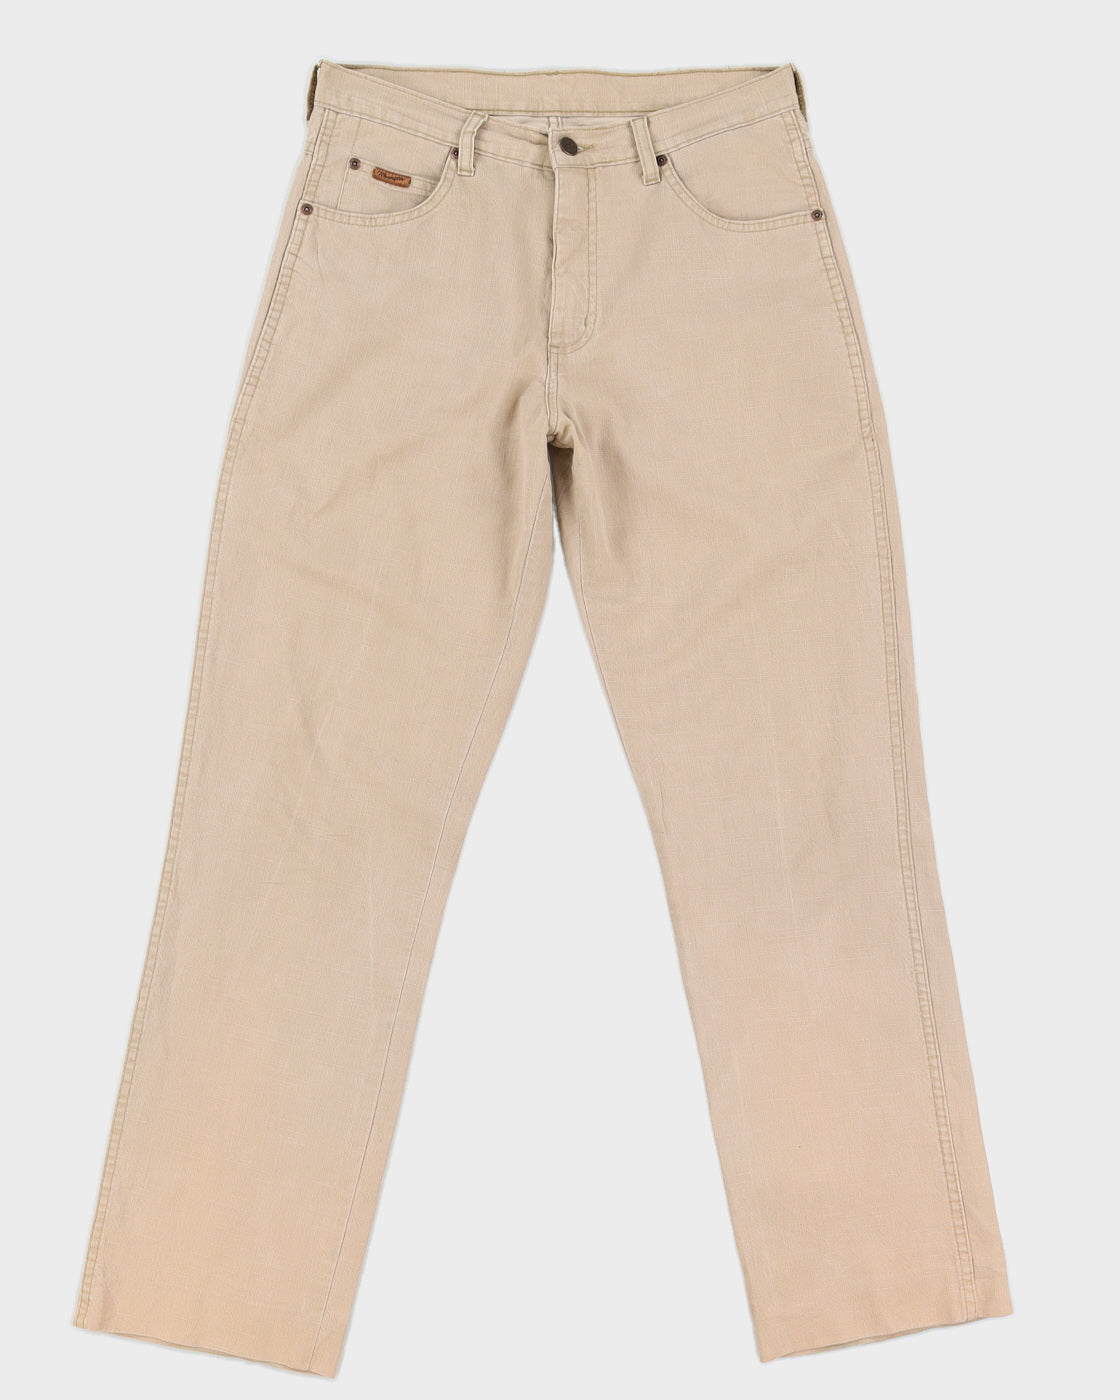 Vintage 90s Wrangler Denim Trousers - W31 L34